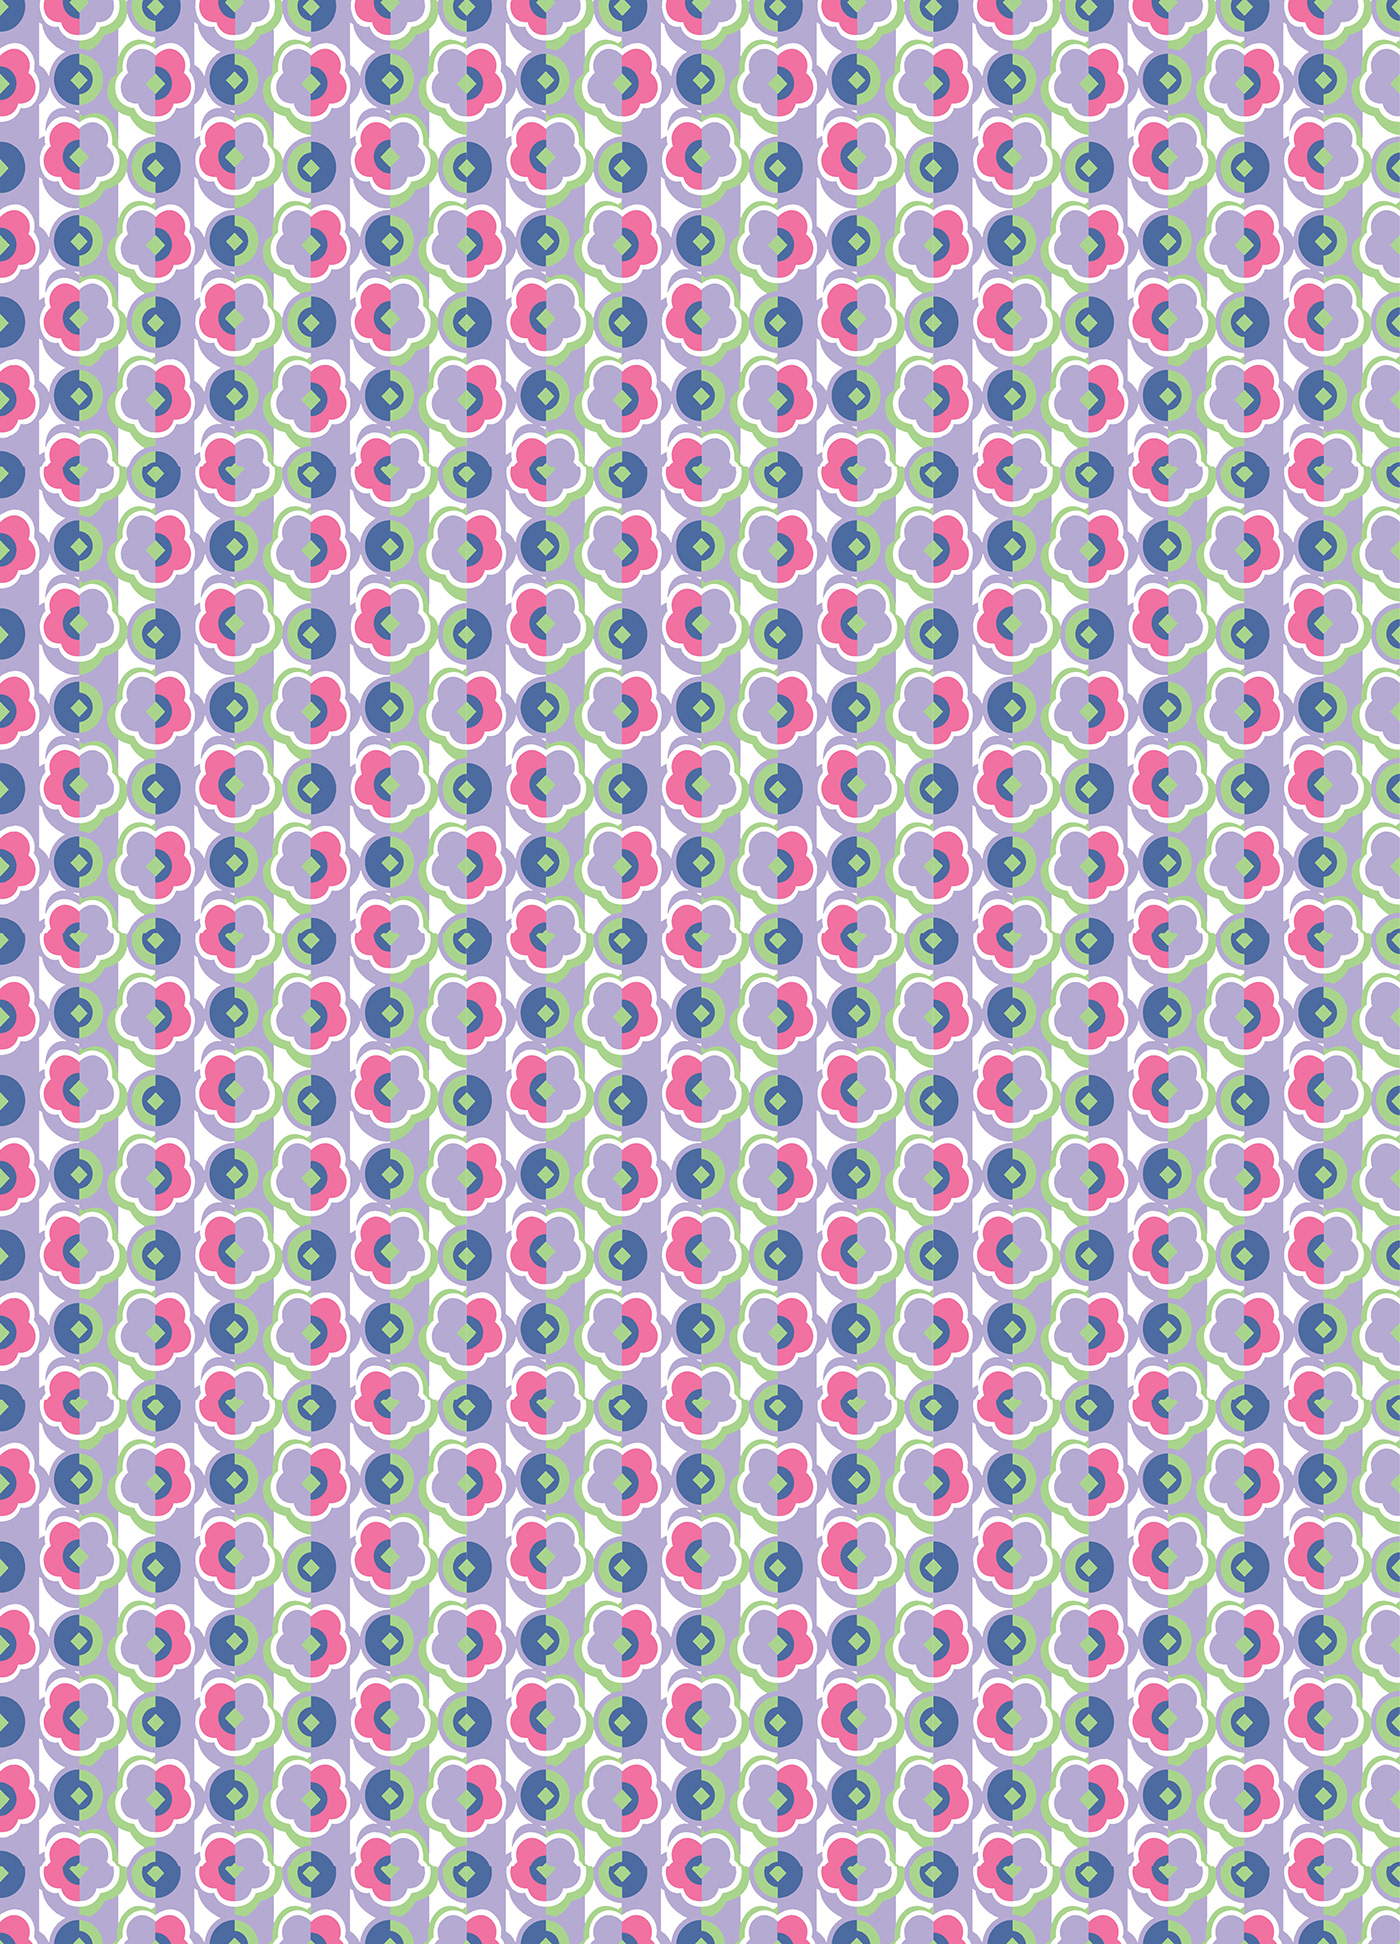 pattern pattern design  Fashion  textile art print print design  kidswear Kidsfashion repeat